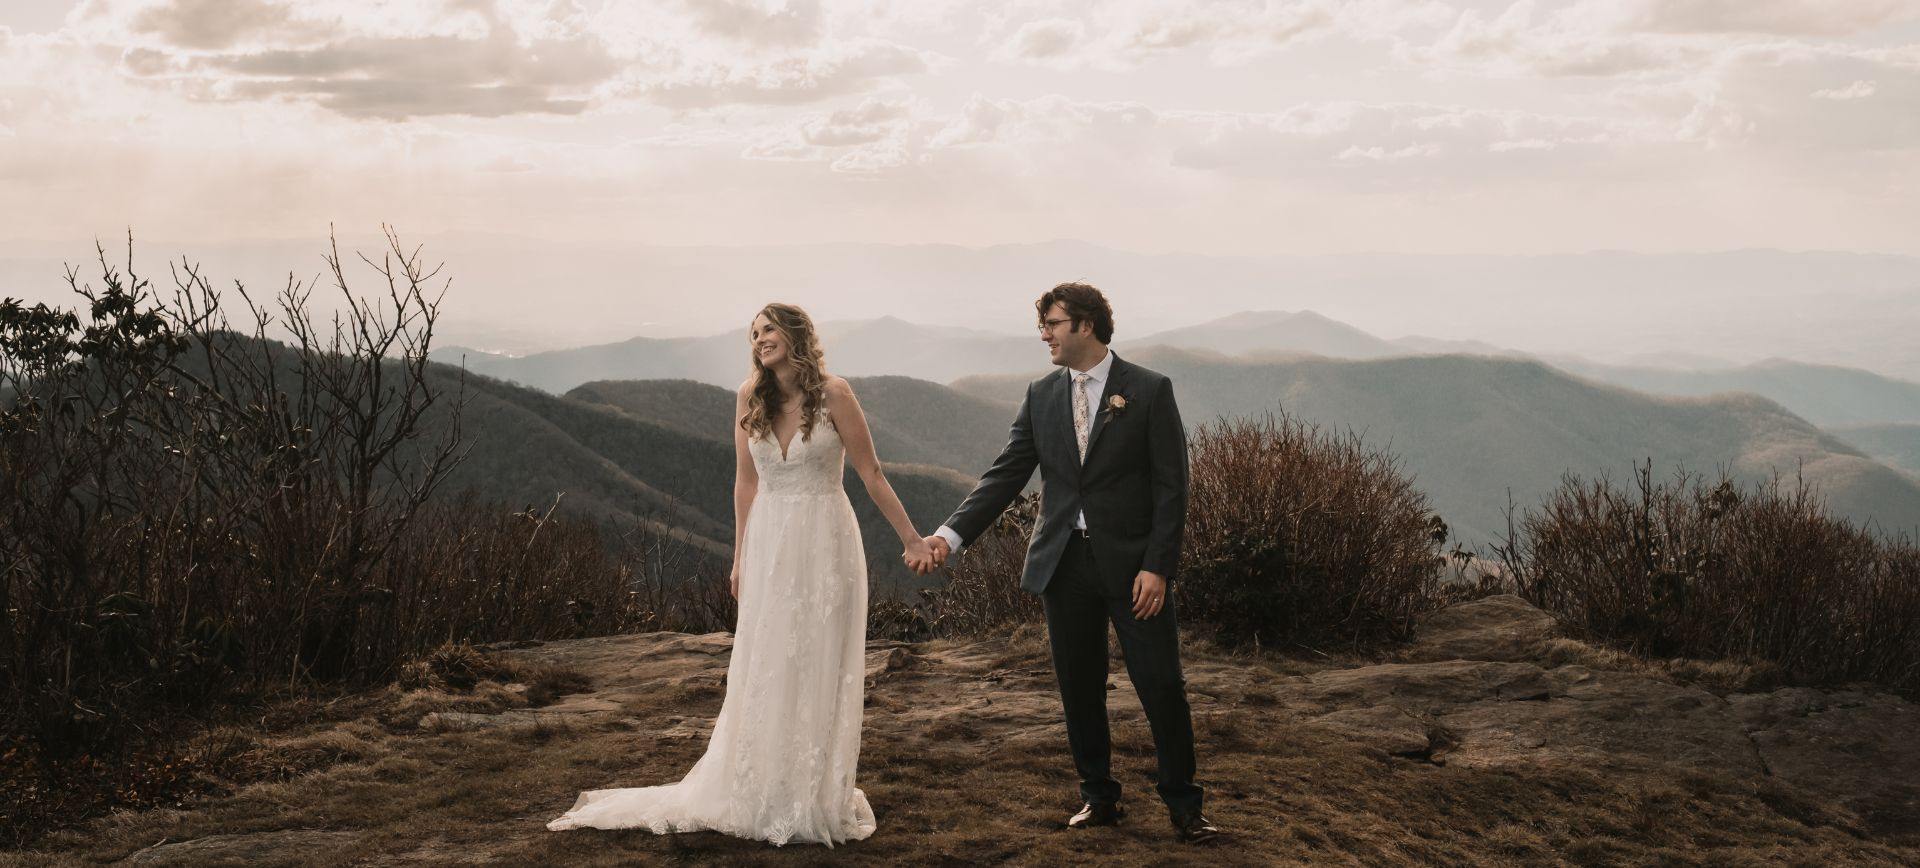 north carolina elopement near asheville - blue ridge mountains wedding